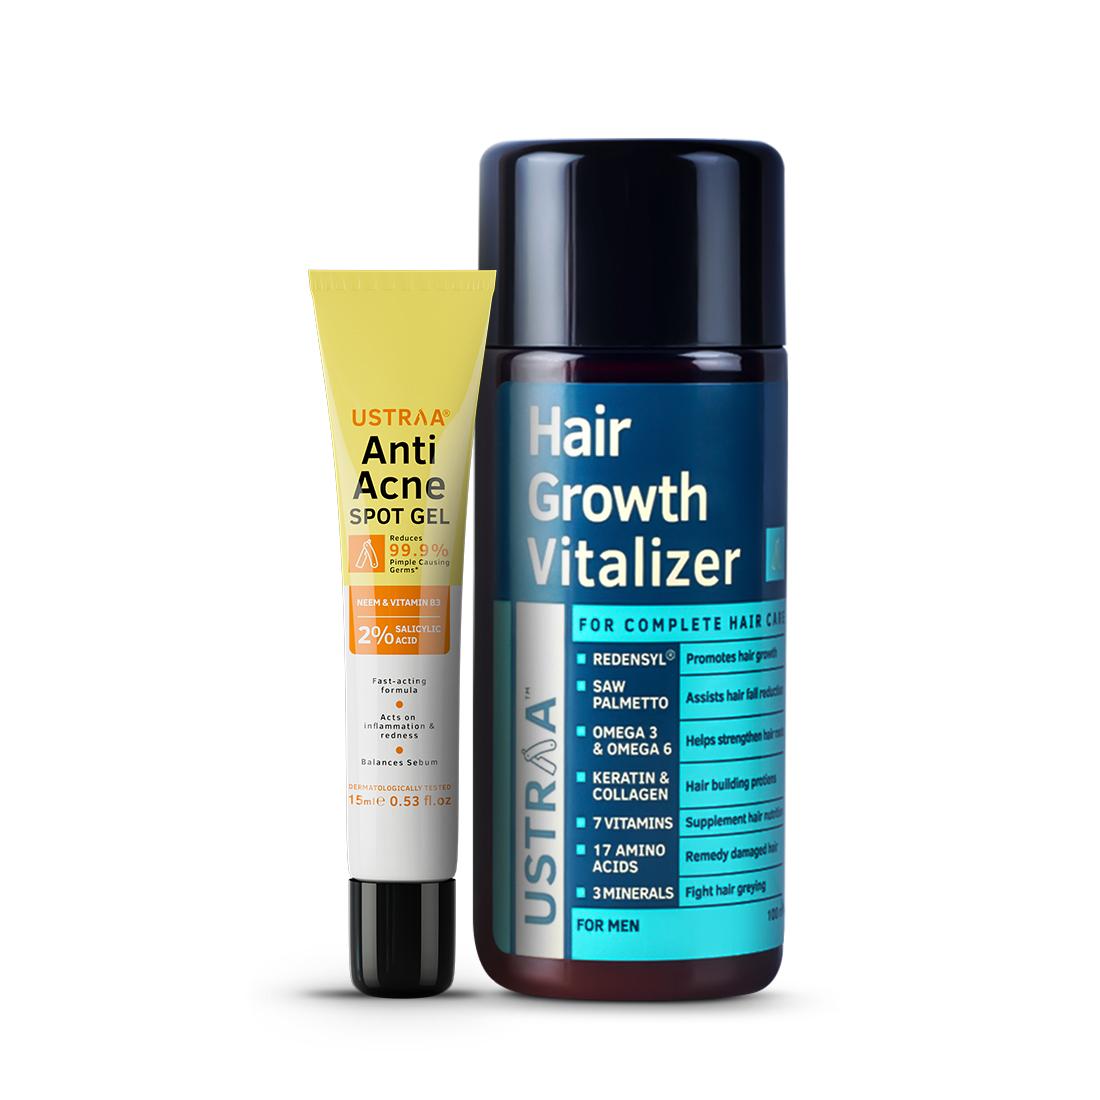 Anti Acne Spot Gel & Hair Growth Viatlizer